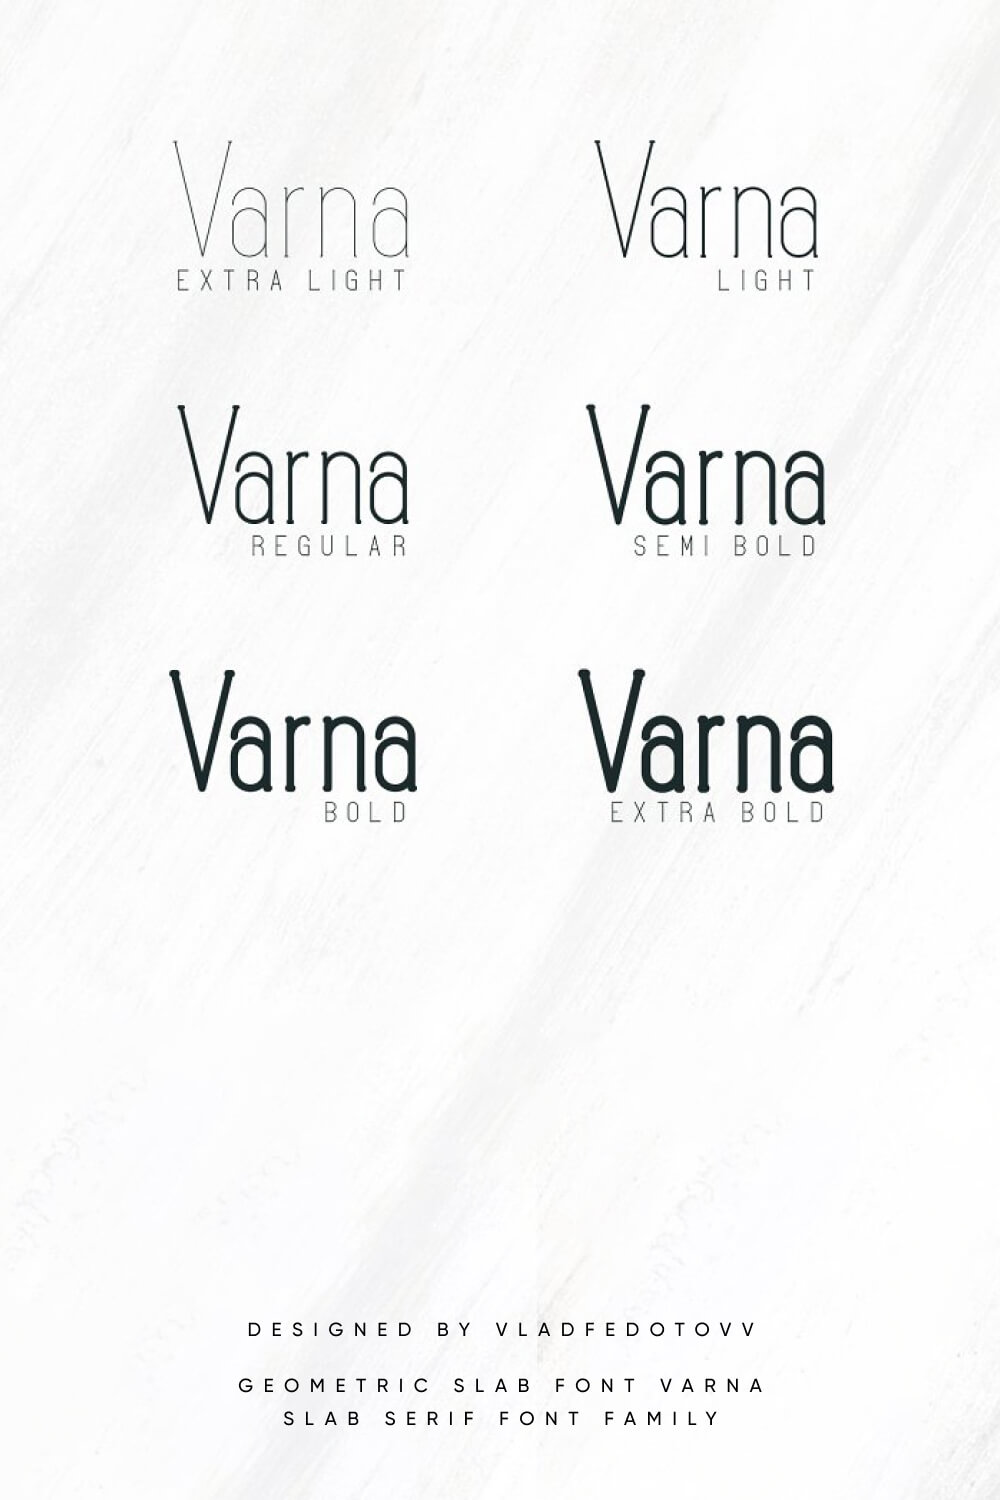 Geometric Slab Font Varna – Slab Serif font family.